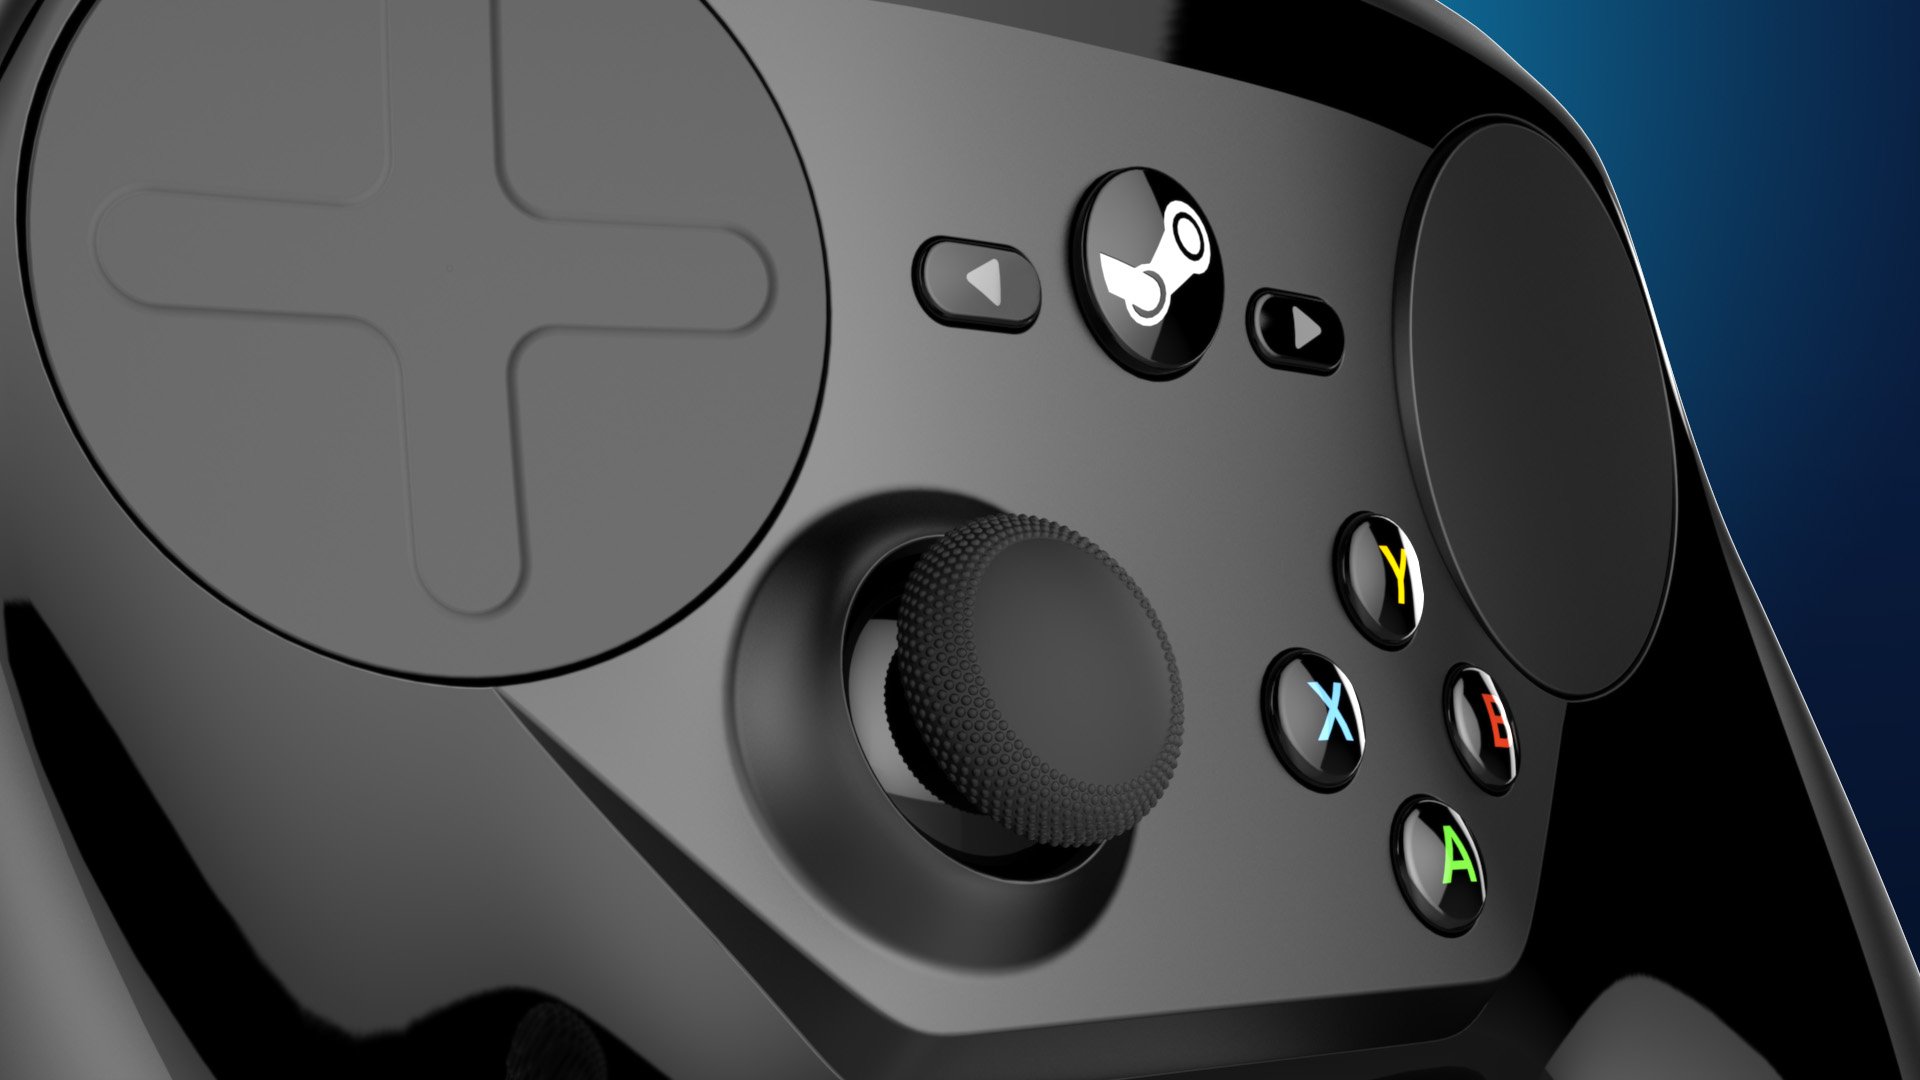 Valve loses $ 4 million in case of Steam Controller patent infringement